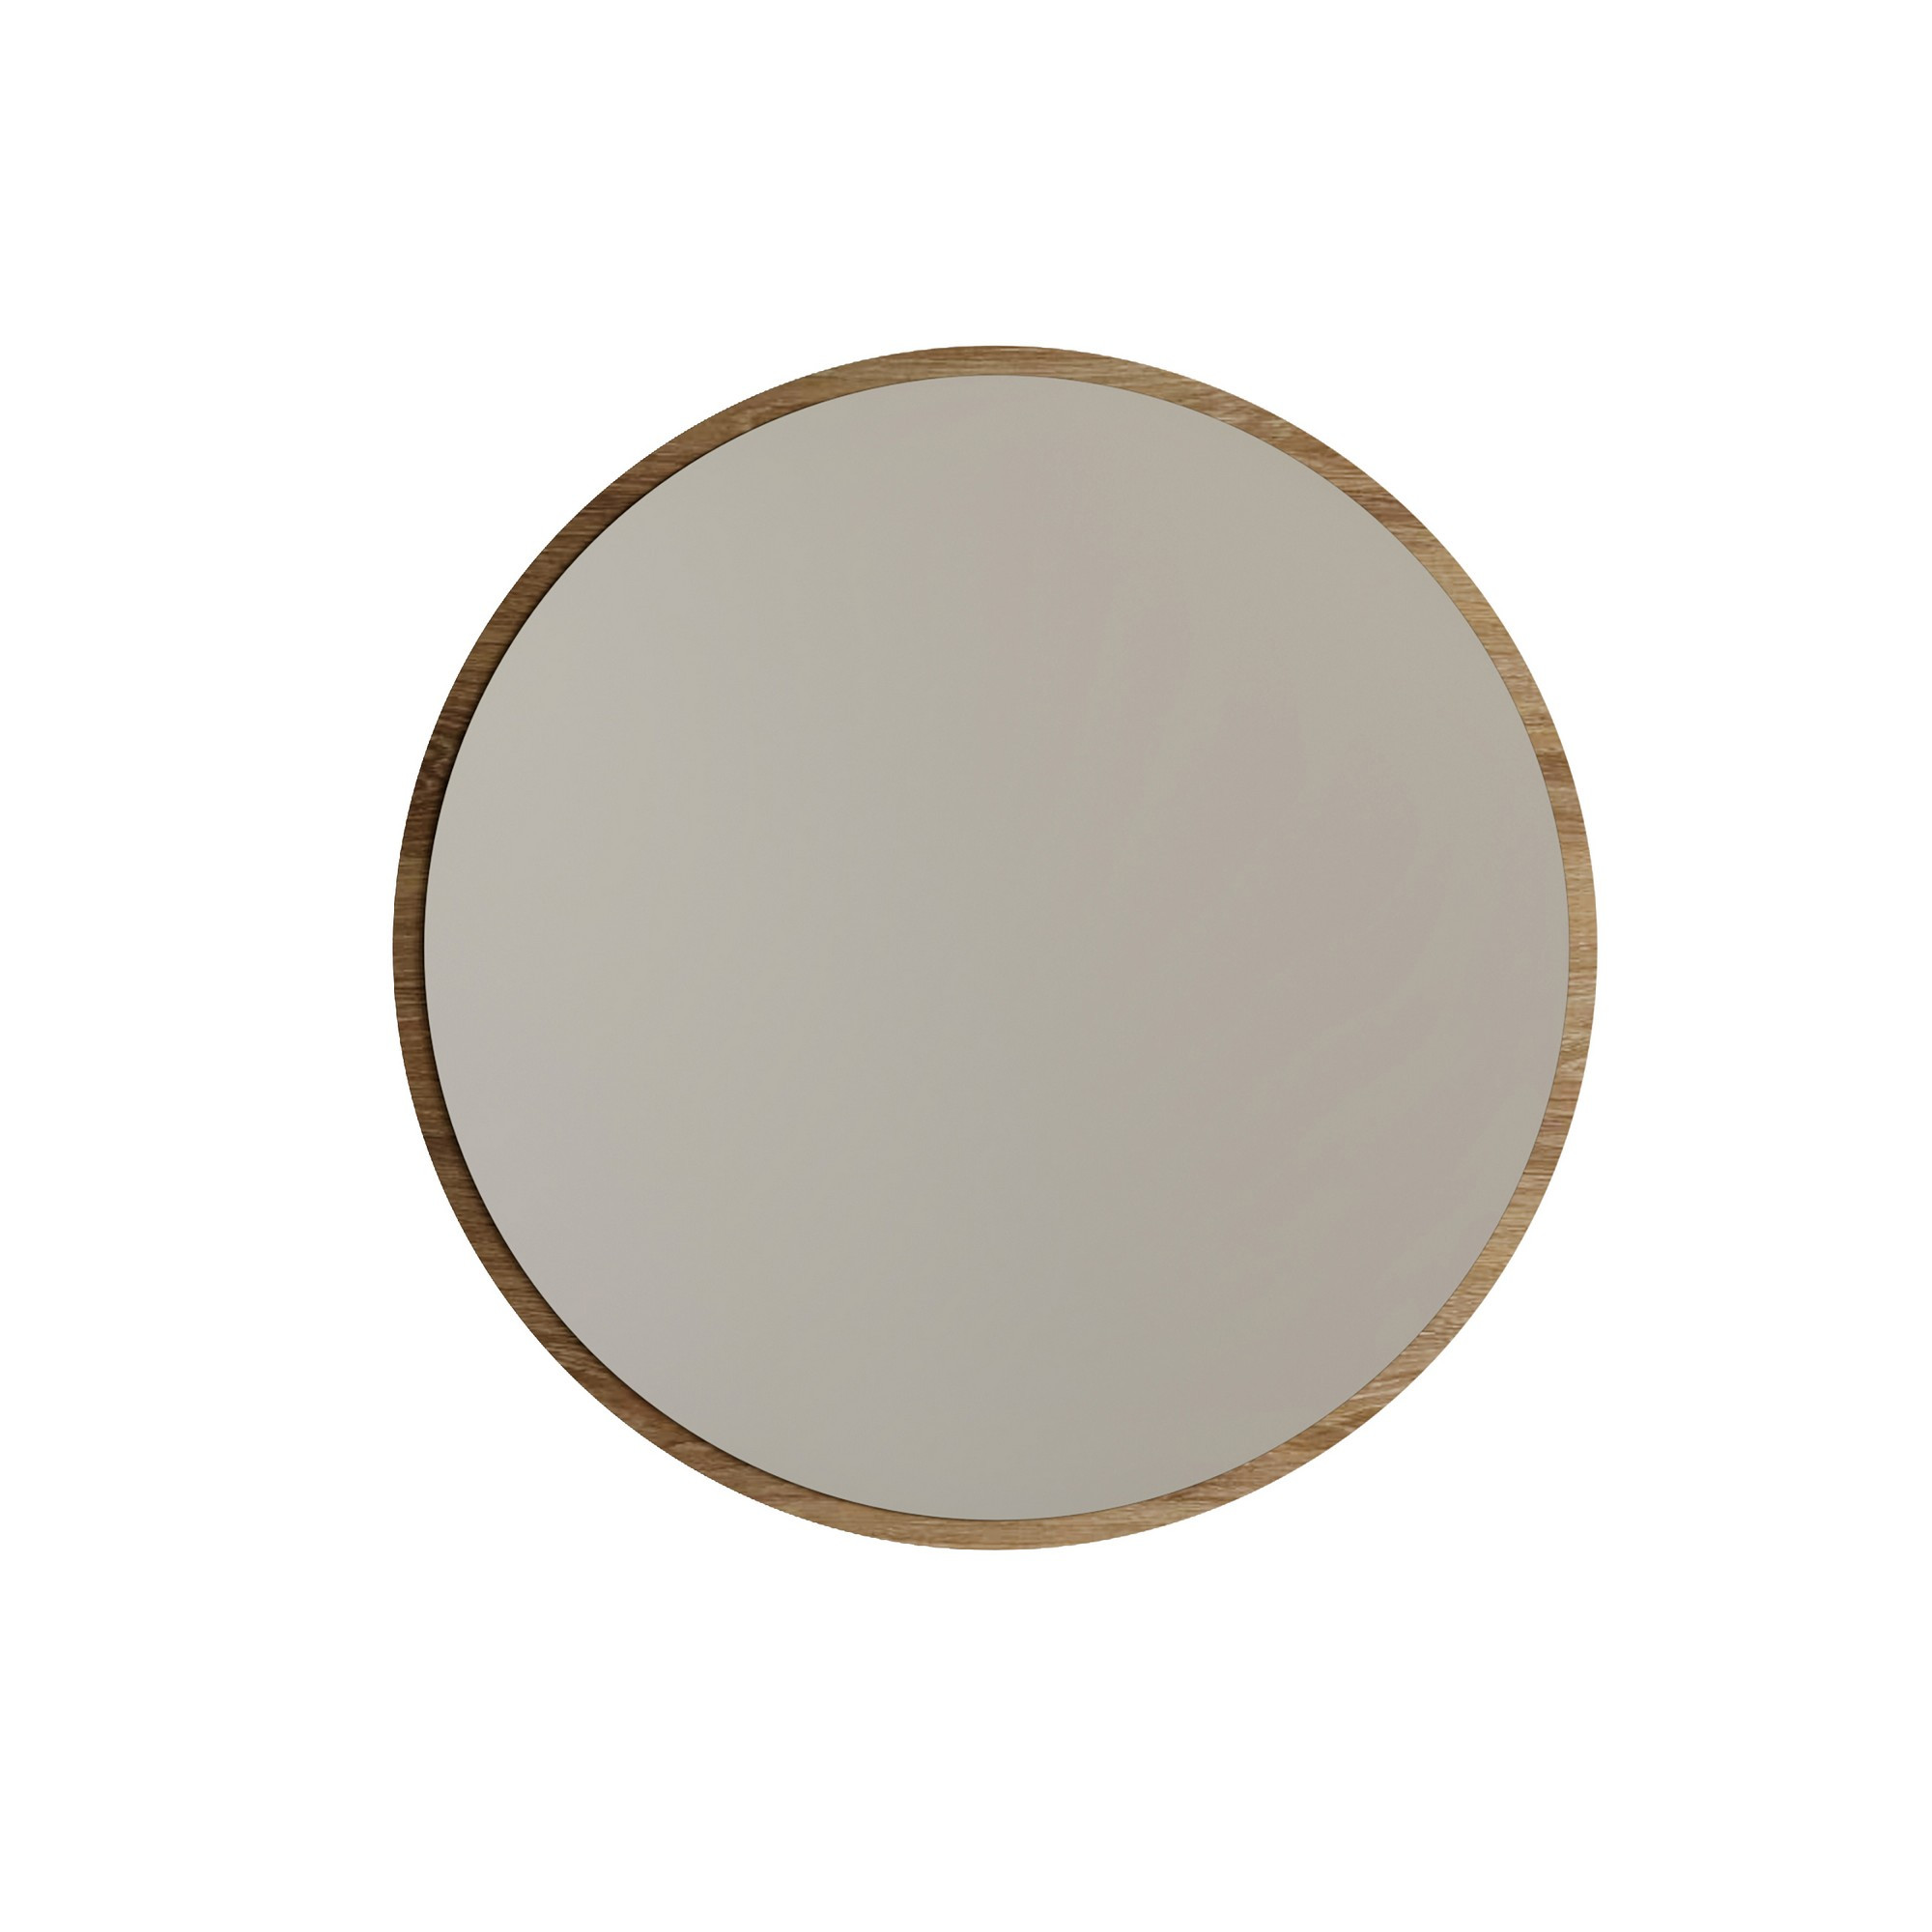 NORDVÄRK Dekoratif vægspejl, rund - spejlglas og valnøddefarvet melamin (Ø60)